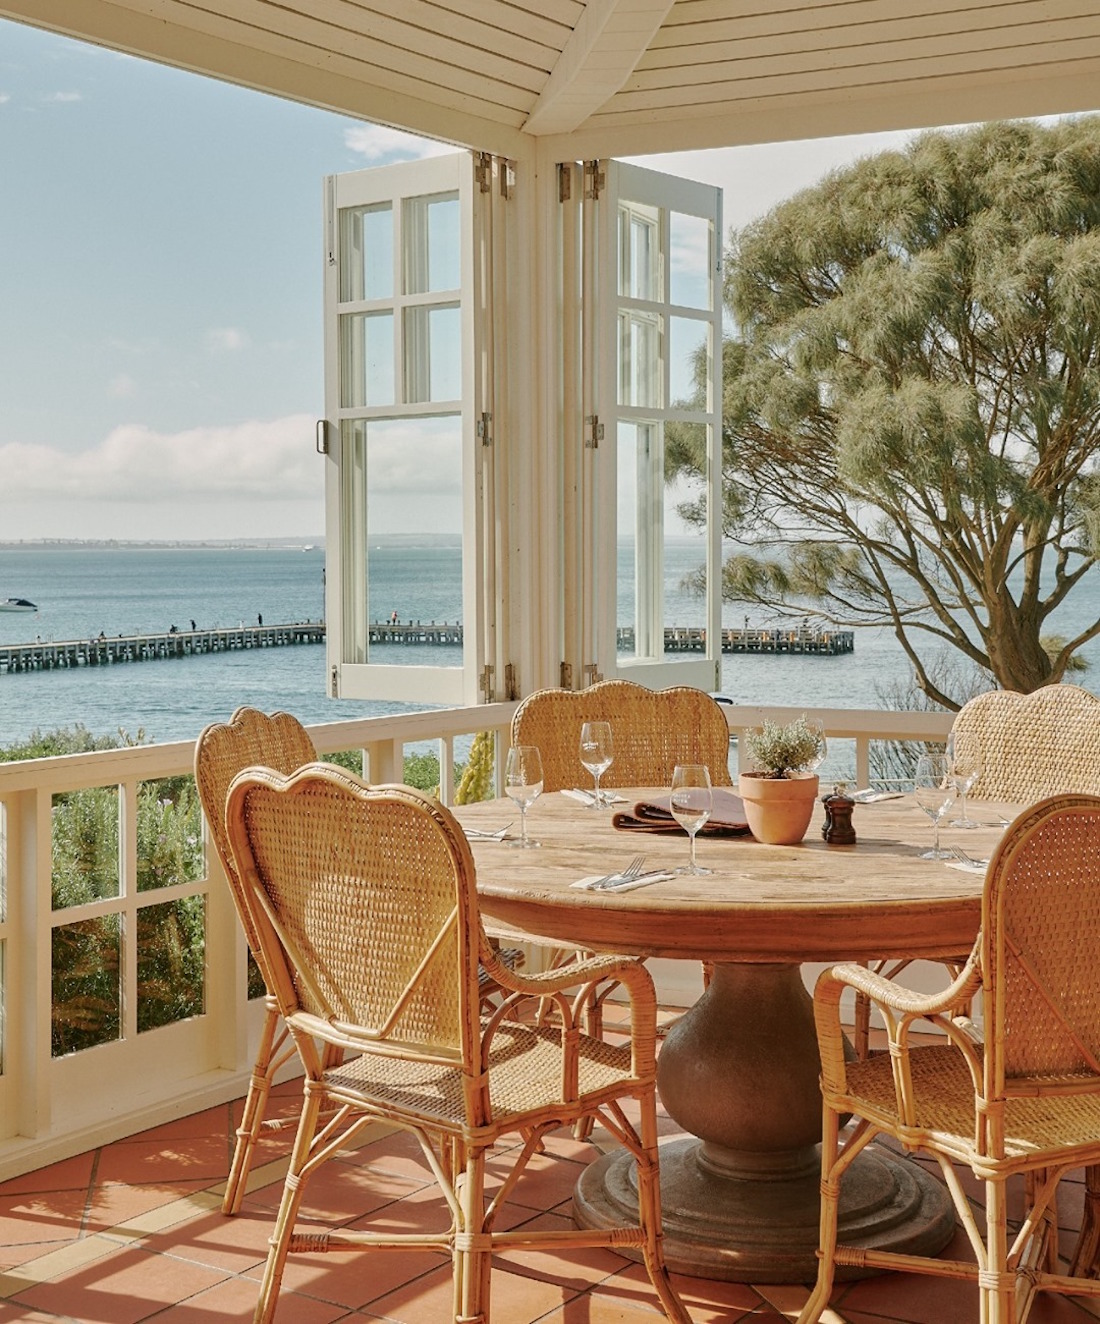 Terrace windows open up to a breathtaking ocean view.